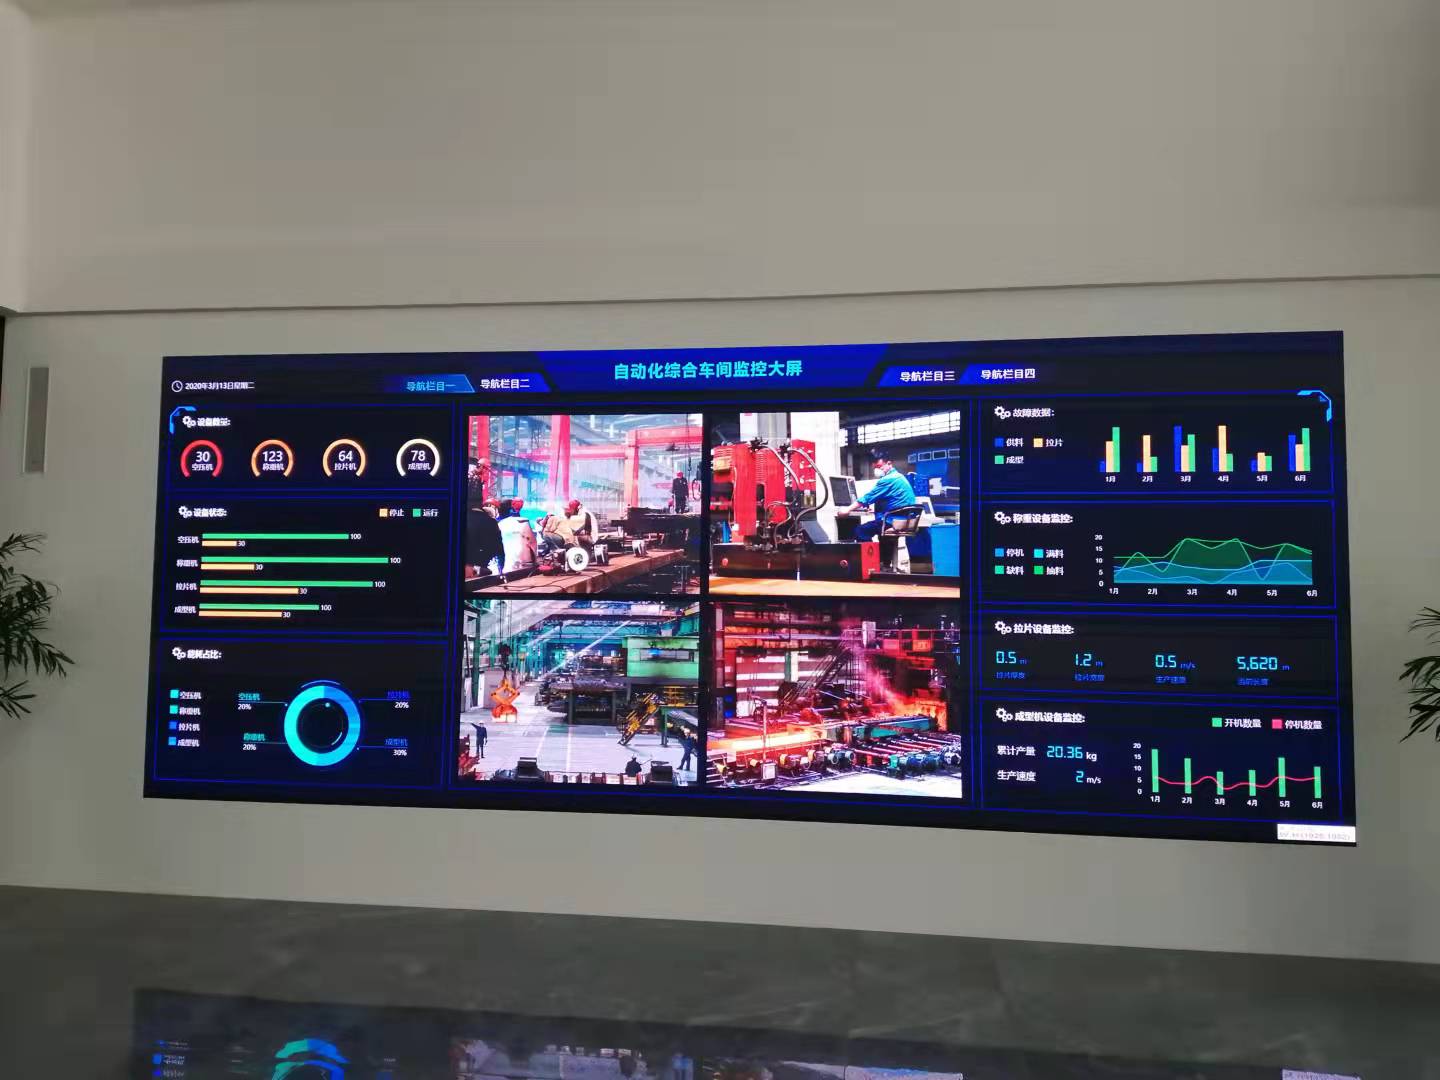 Digital monitoring of factory